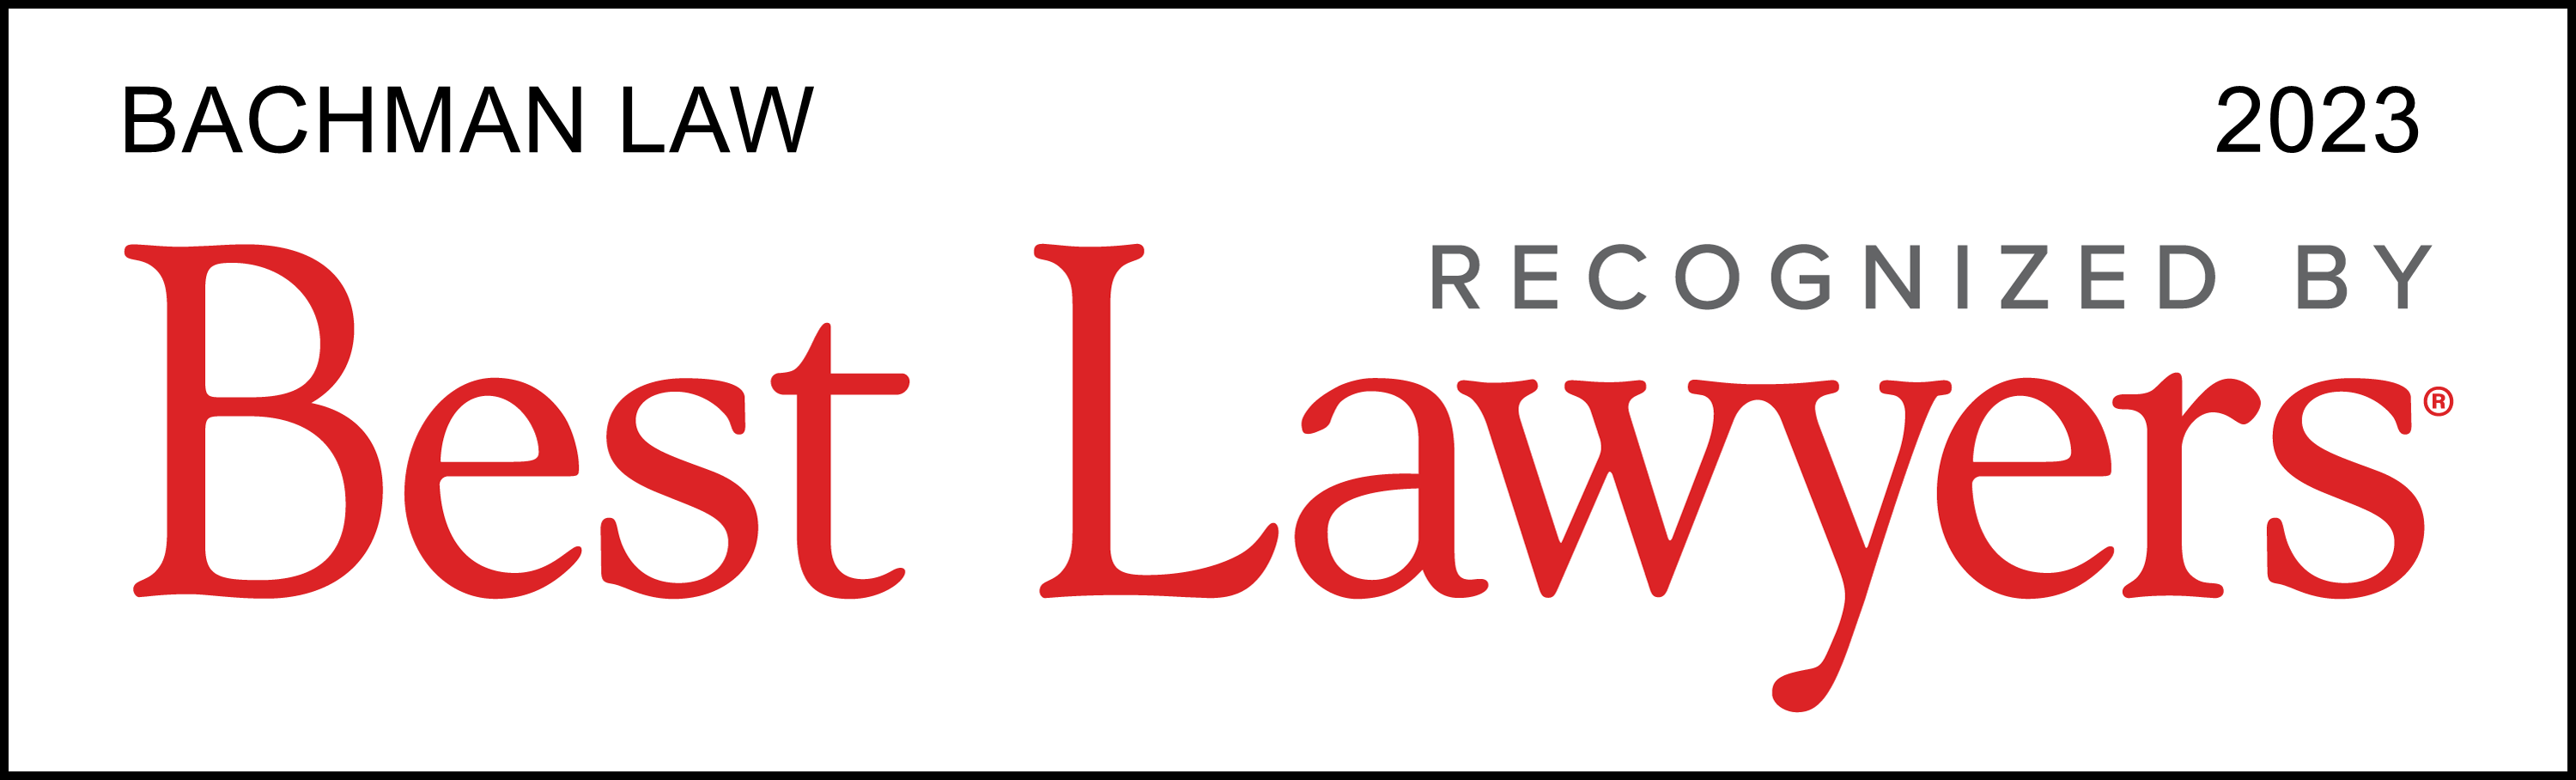 Best Lawyers Firm Logo 2023